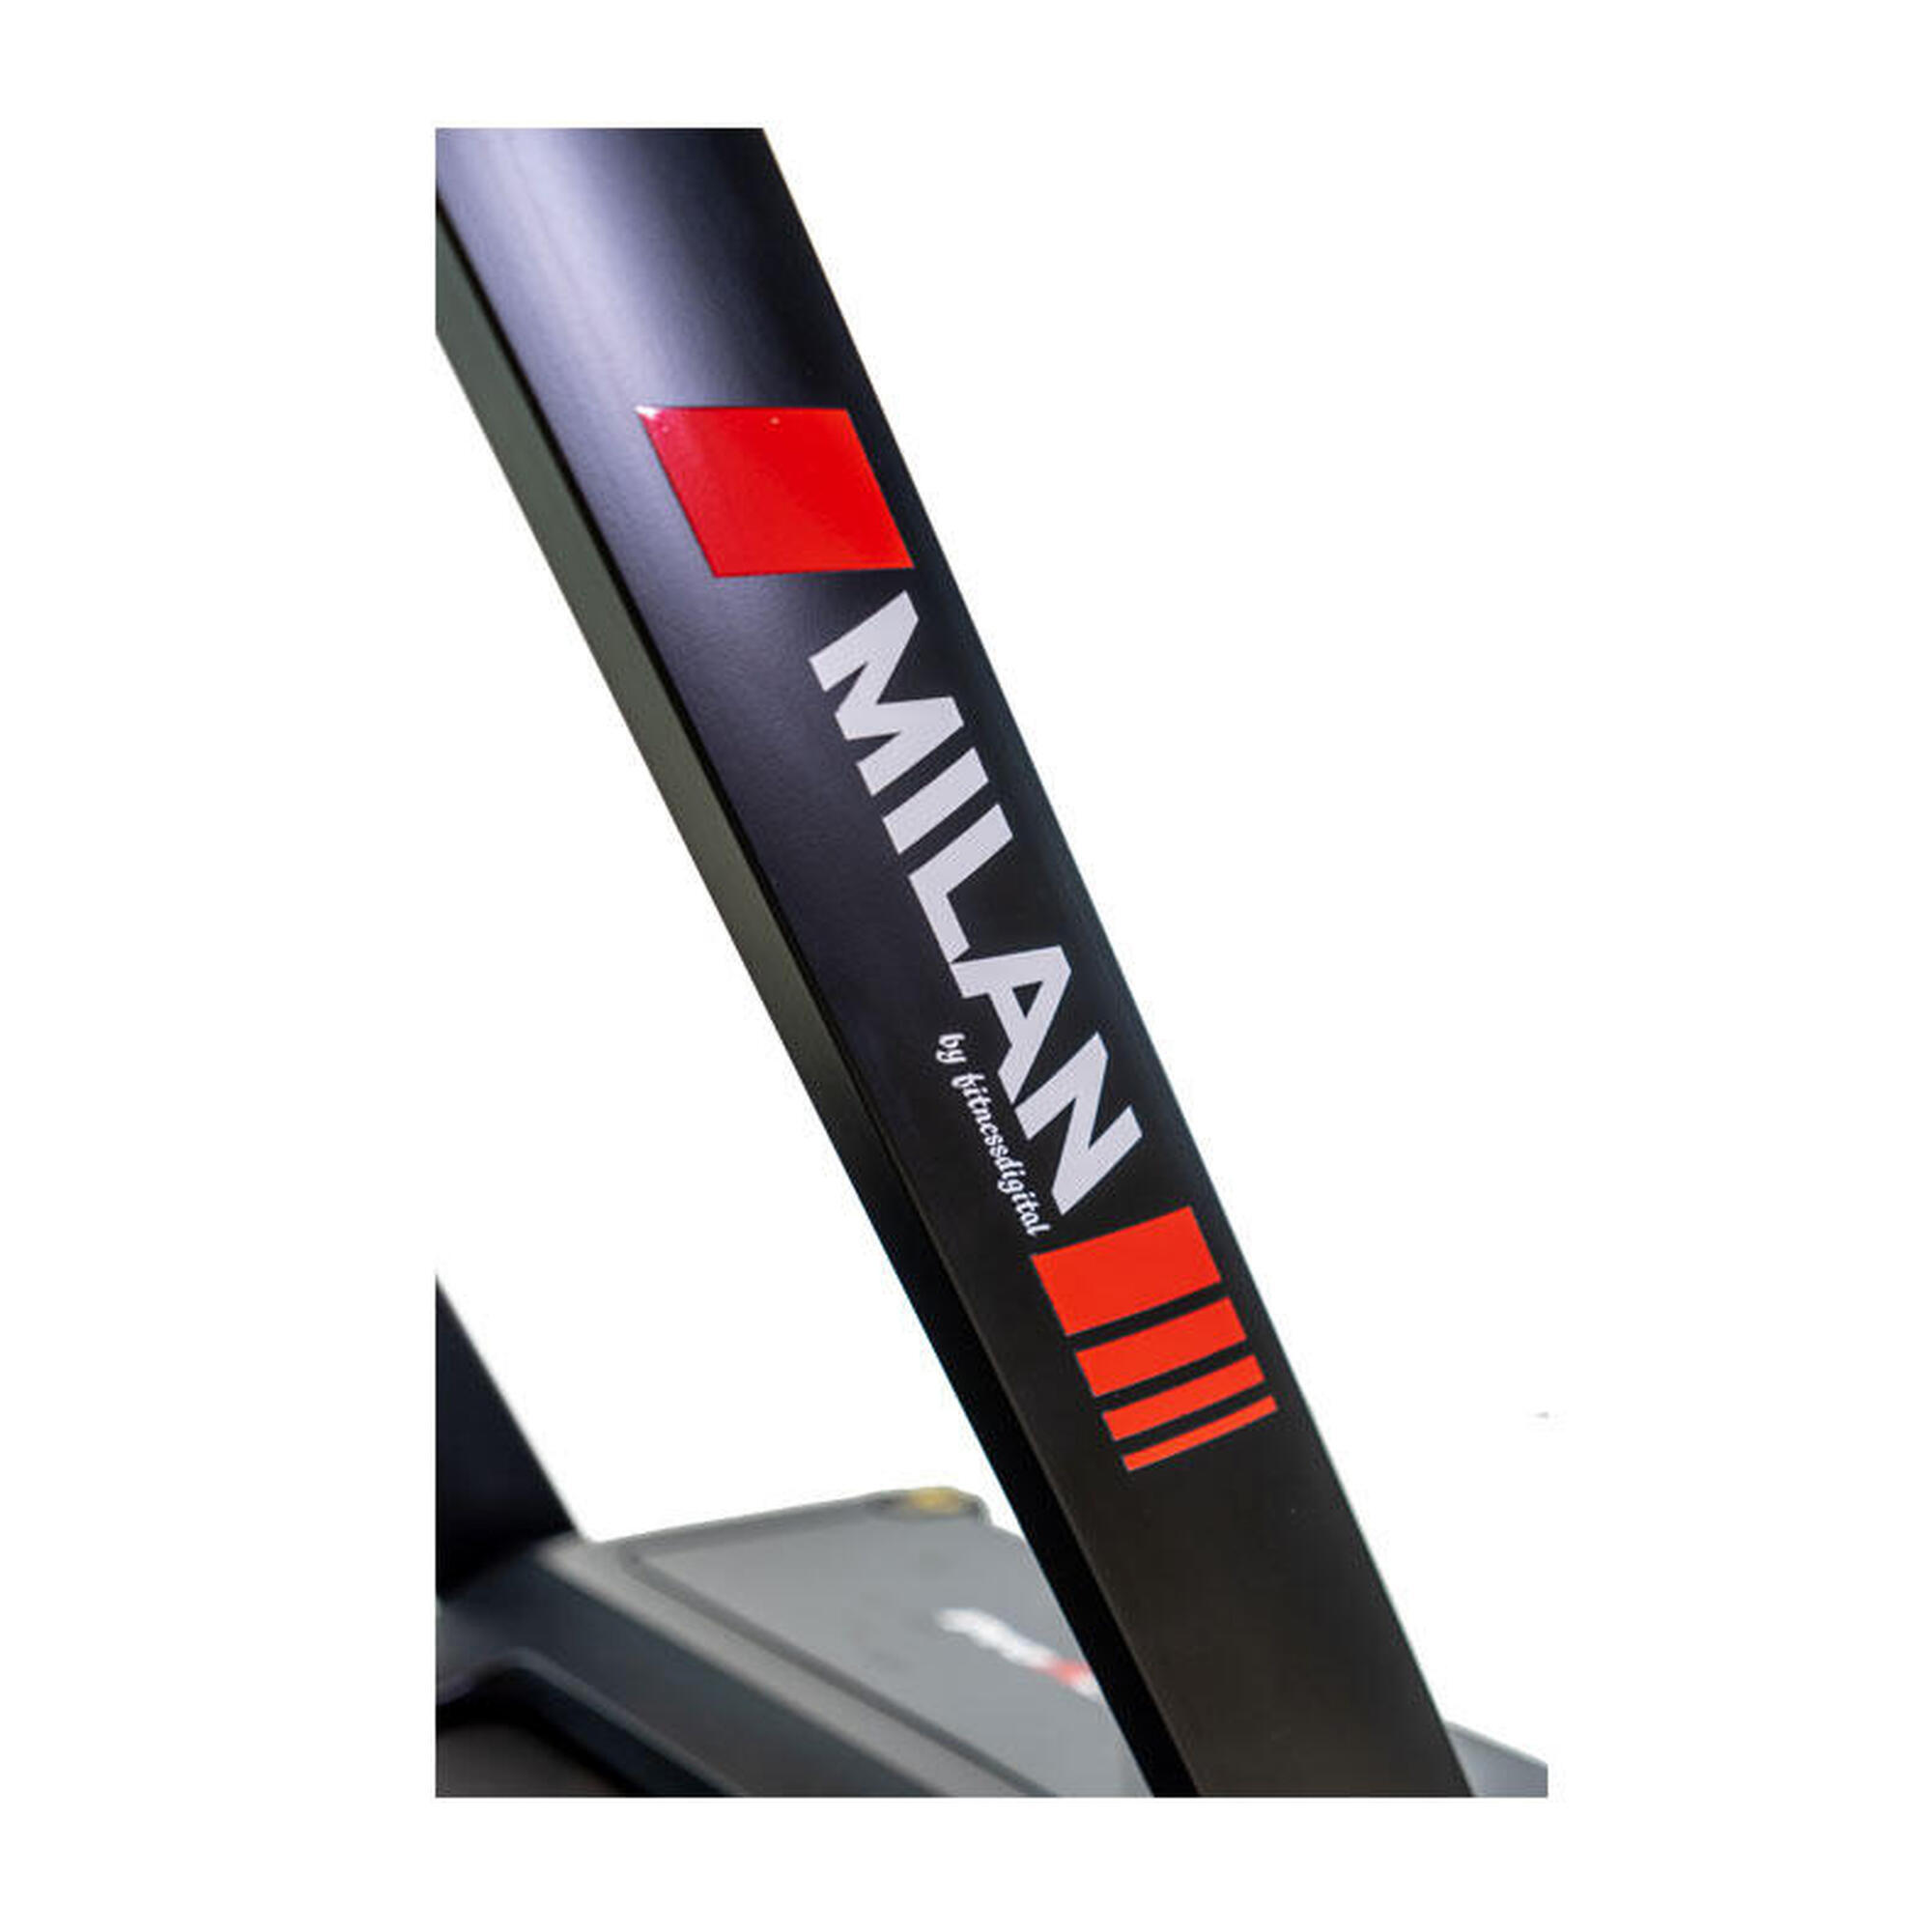 Tapis de course - Milan - Kinomap et Zwift - 140x50cm - LCD